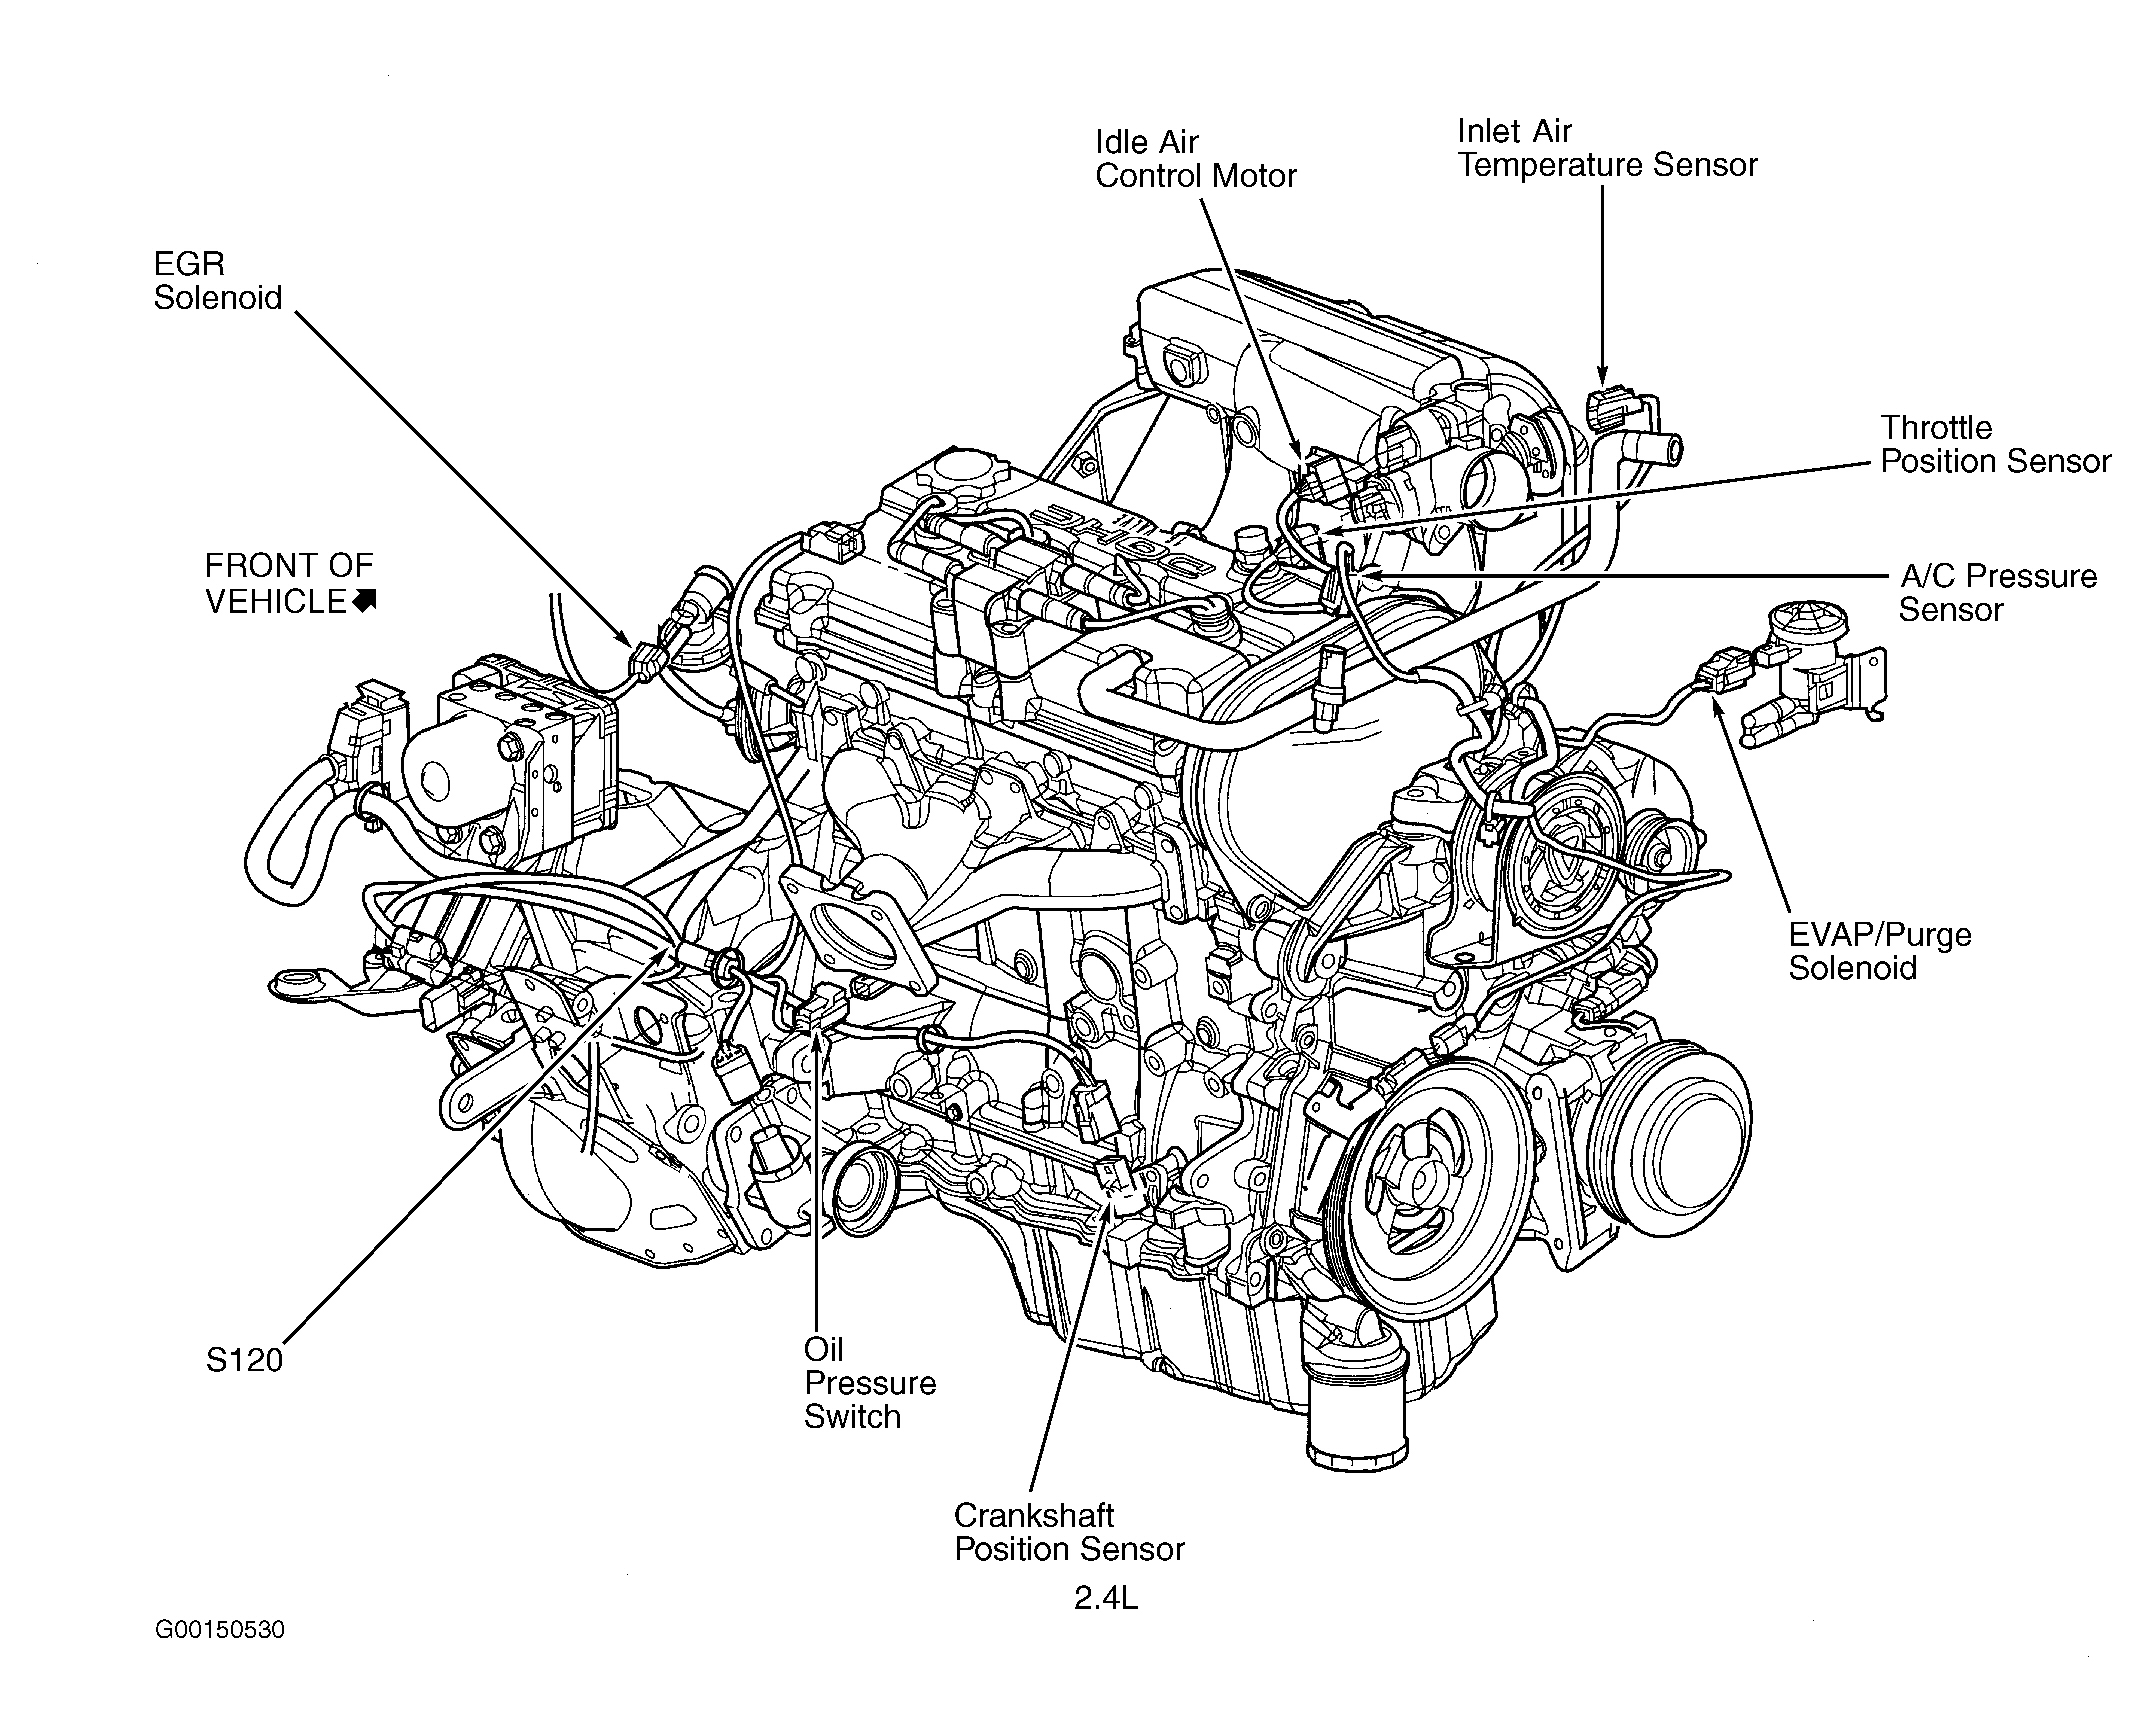 Dodge Caravan SE 2003 - Component Locations -  Right Side Of Engine (2.4L)